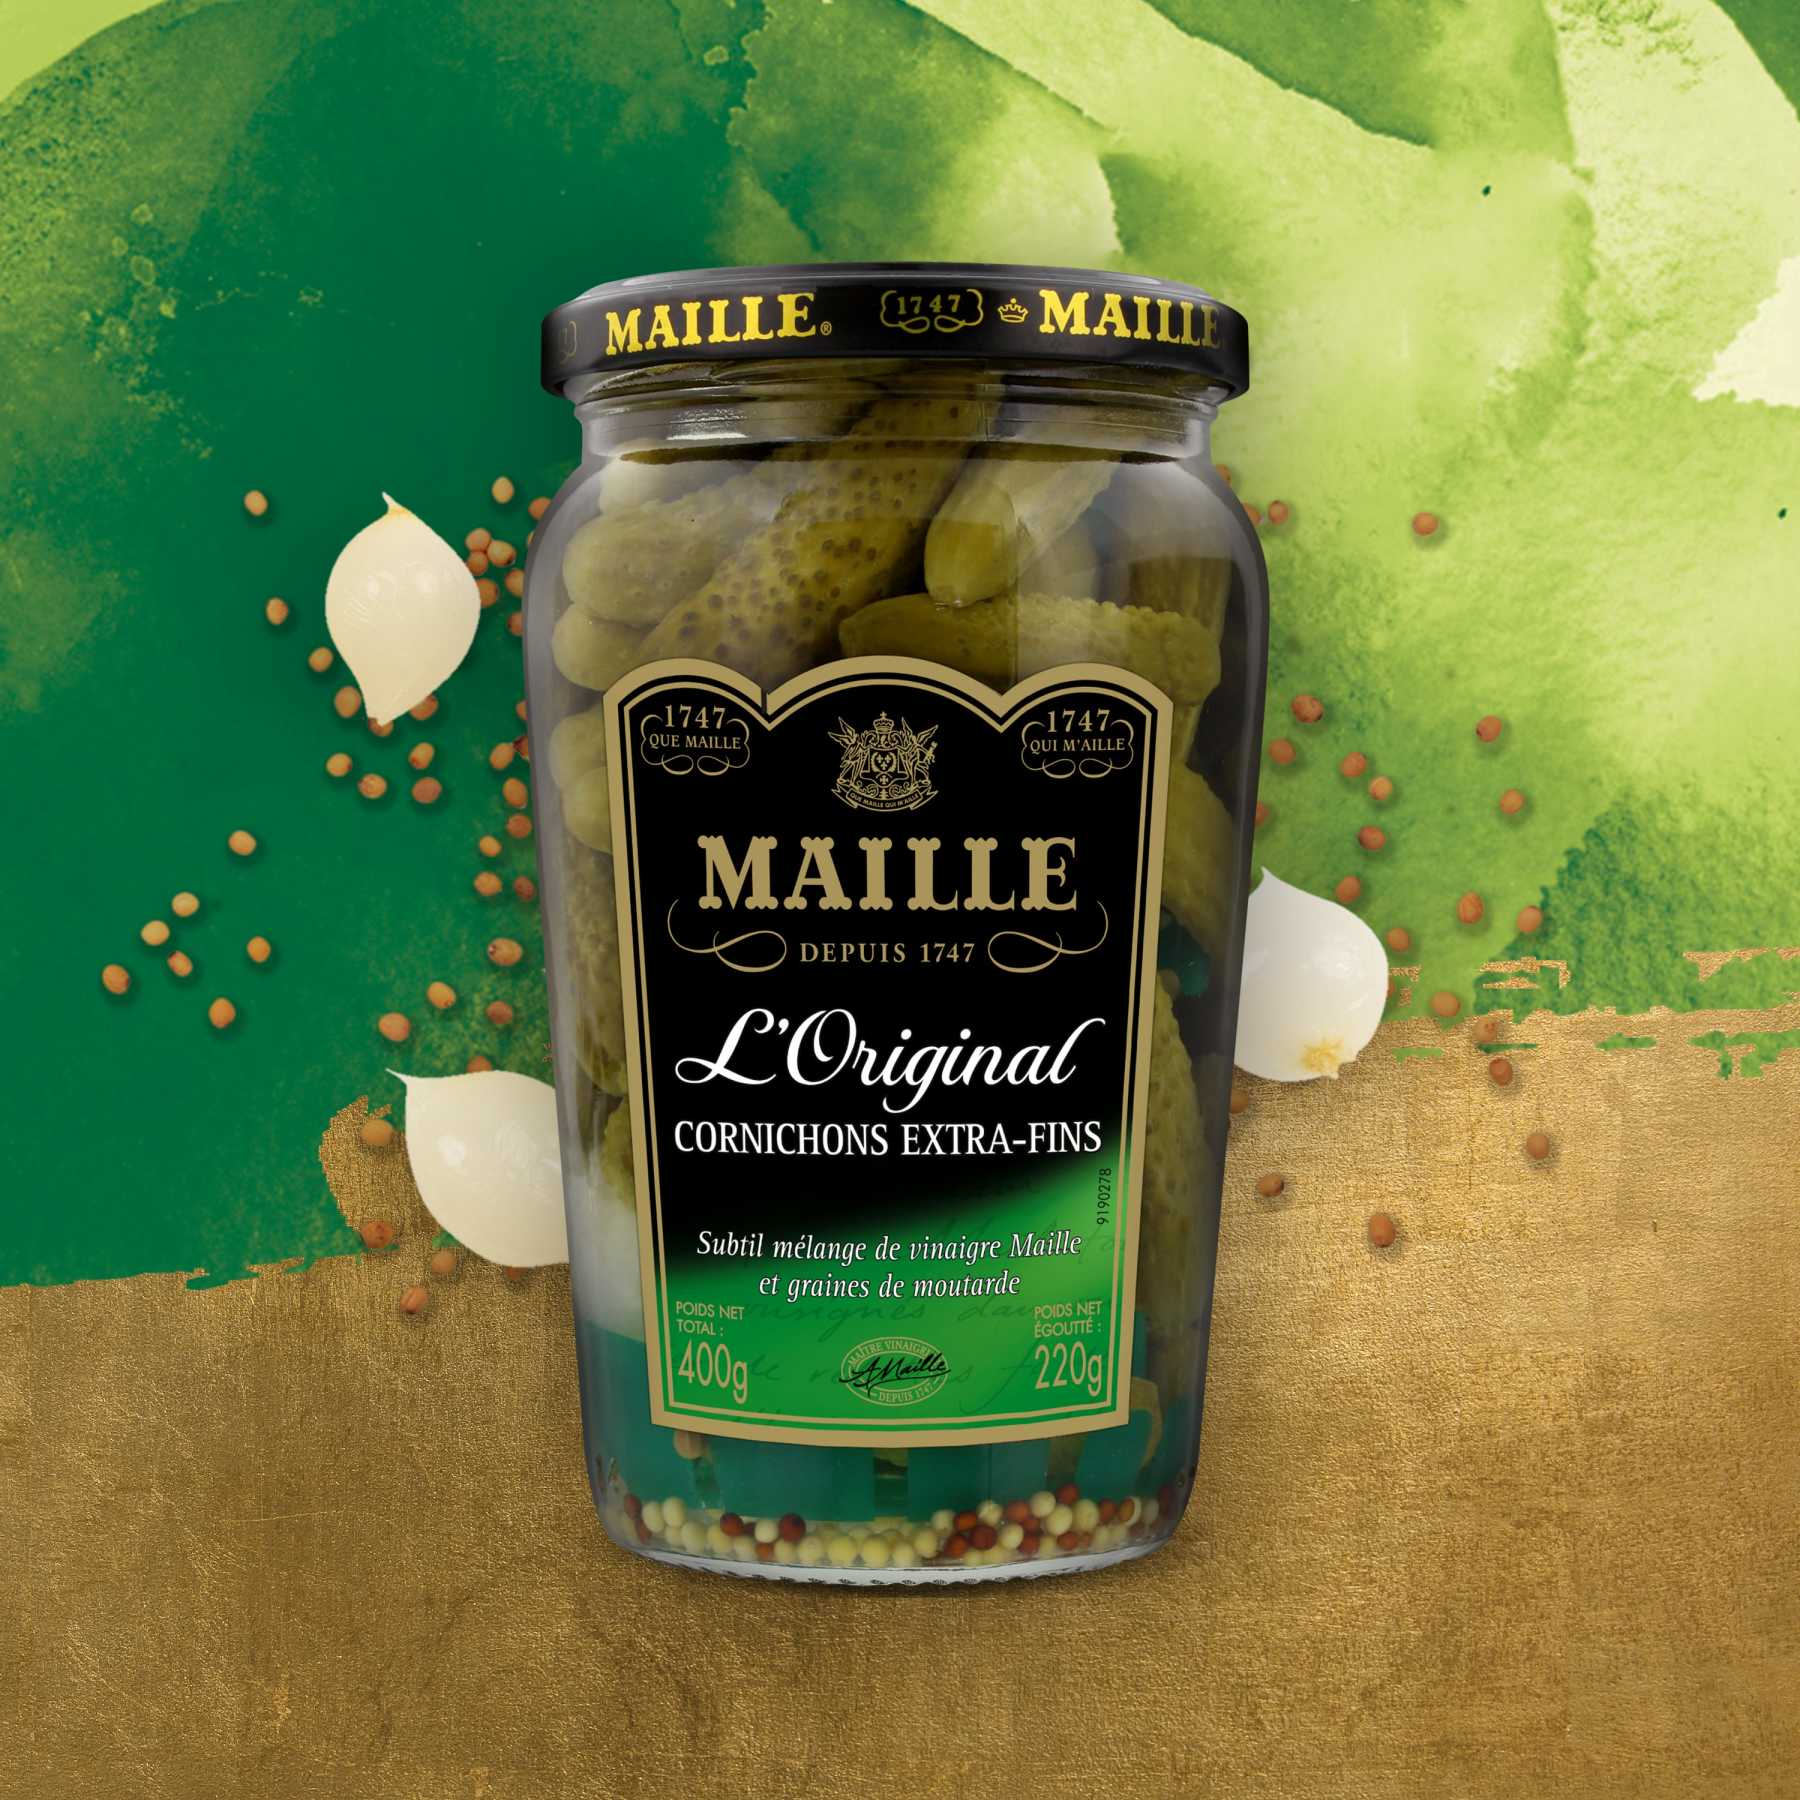 Maille - Cornichons Extra-Fins L'Original Bocal 220 g, new visual